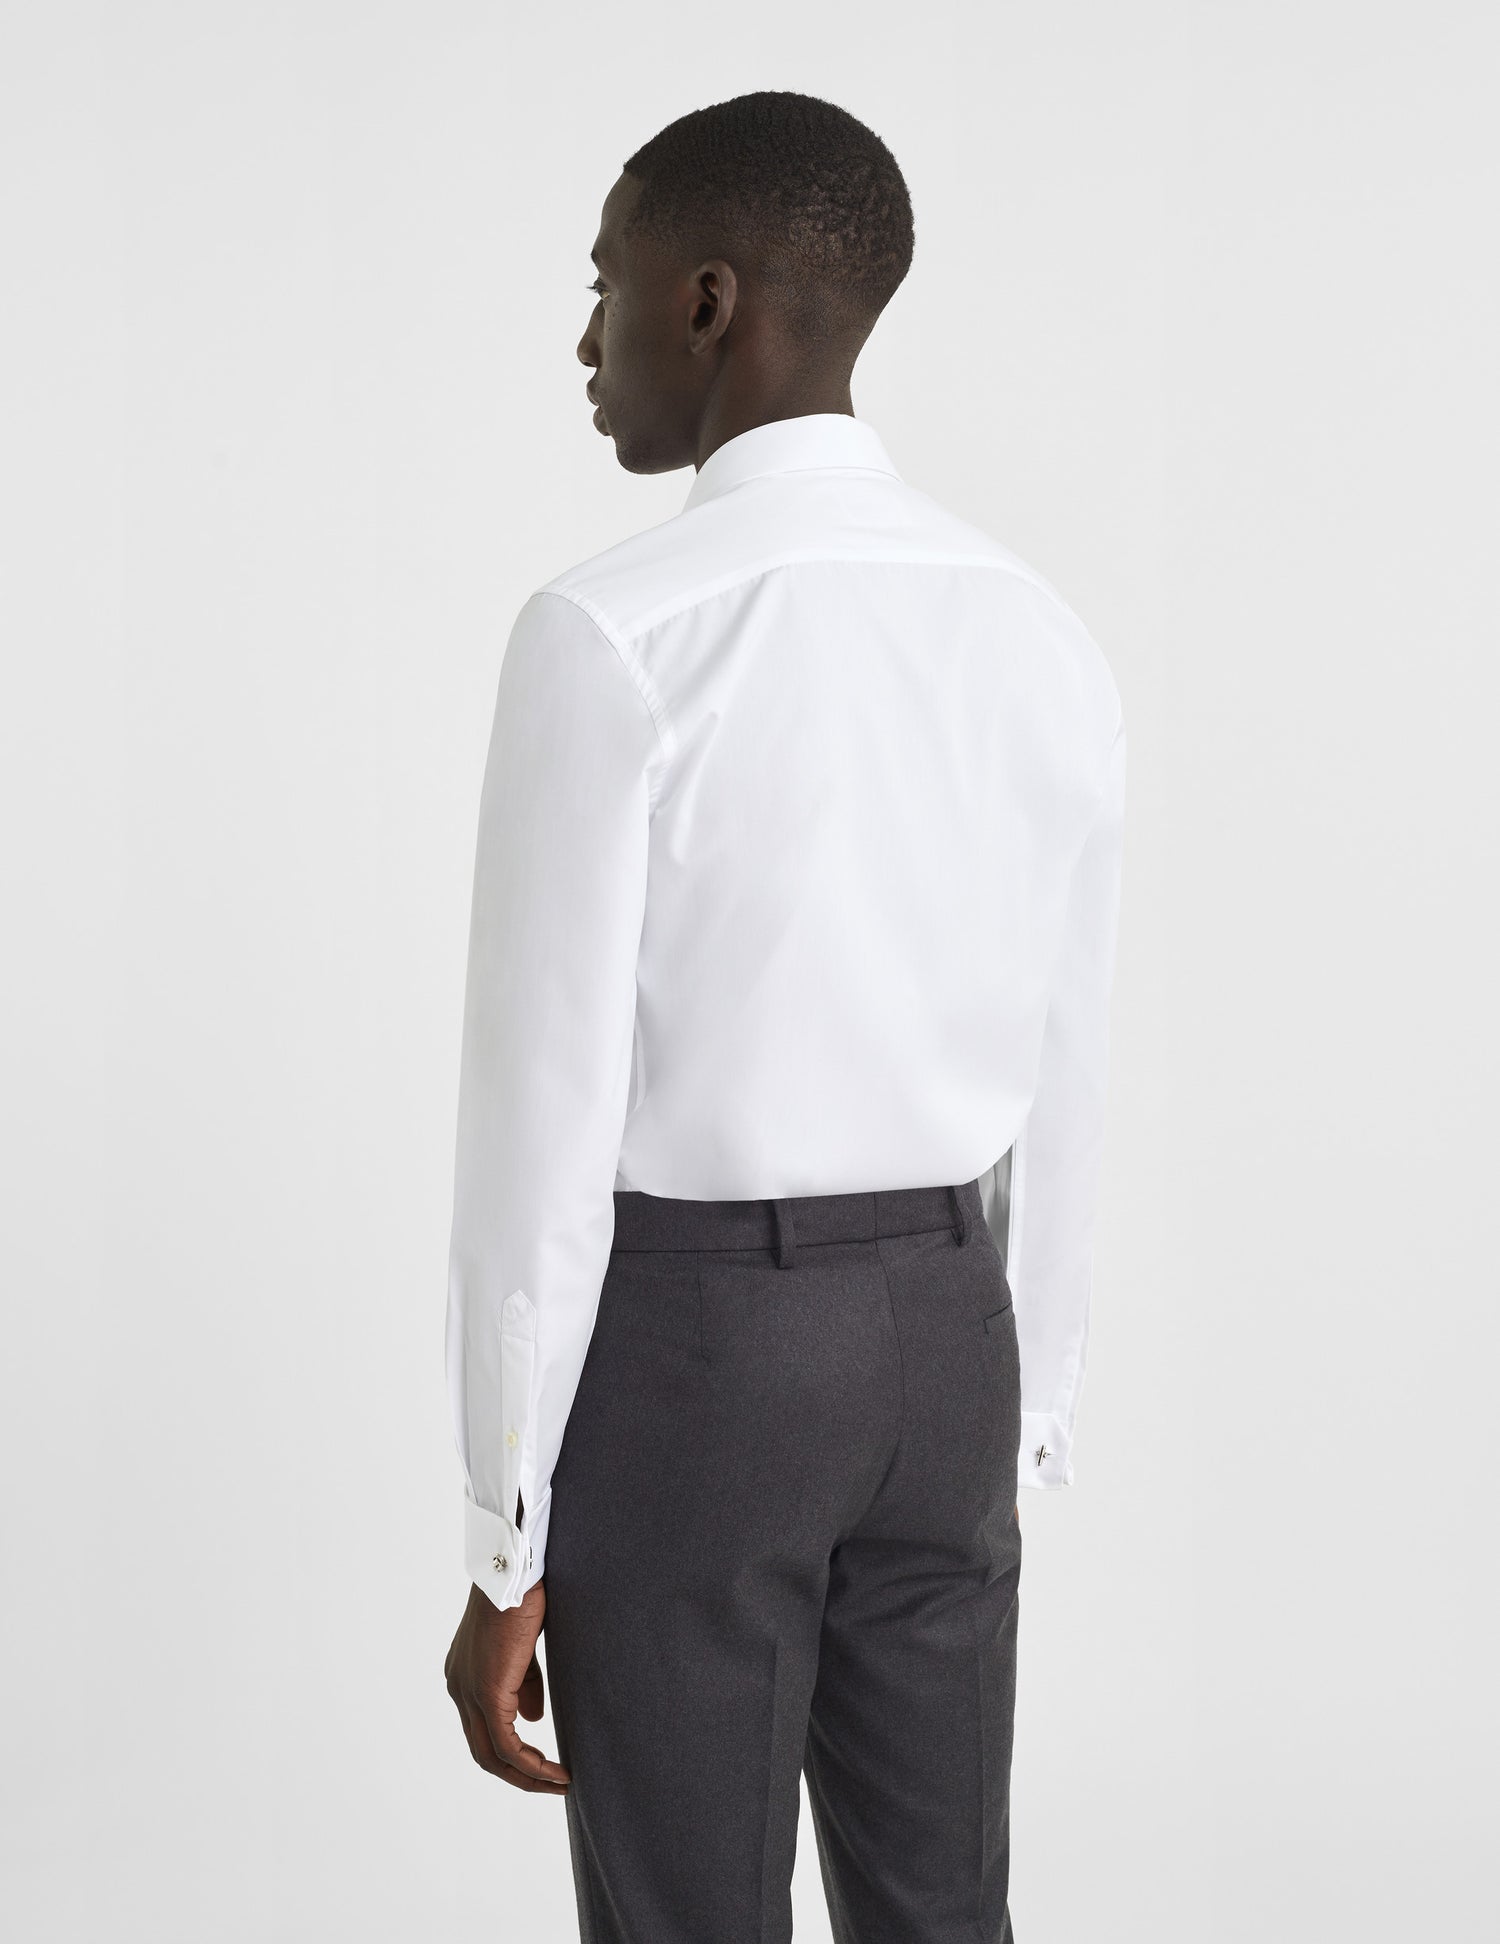 Fitted white shirt - Poplin - Italian Collar - French Cuffs#4